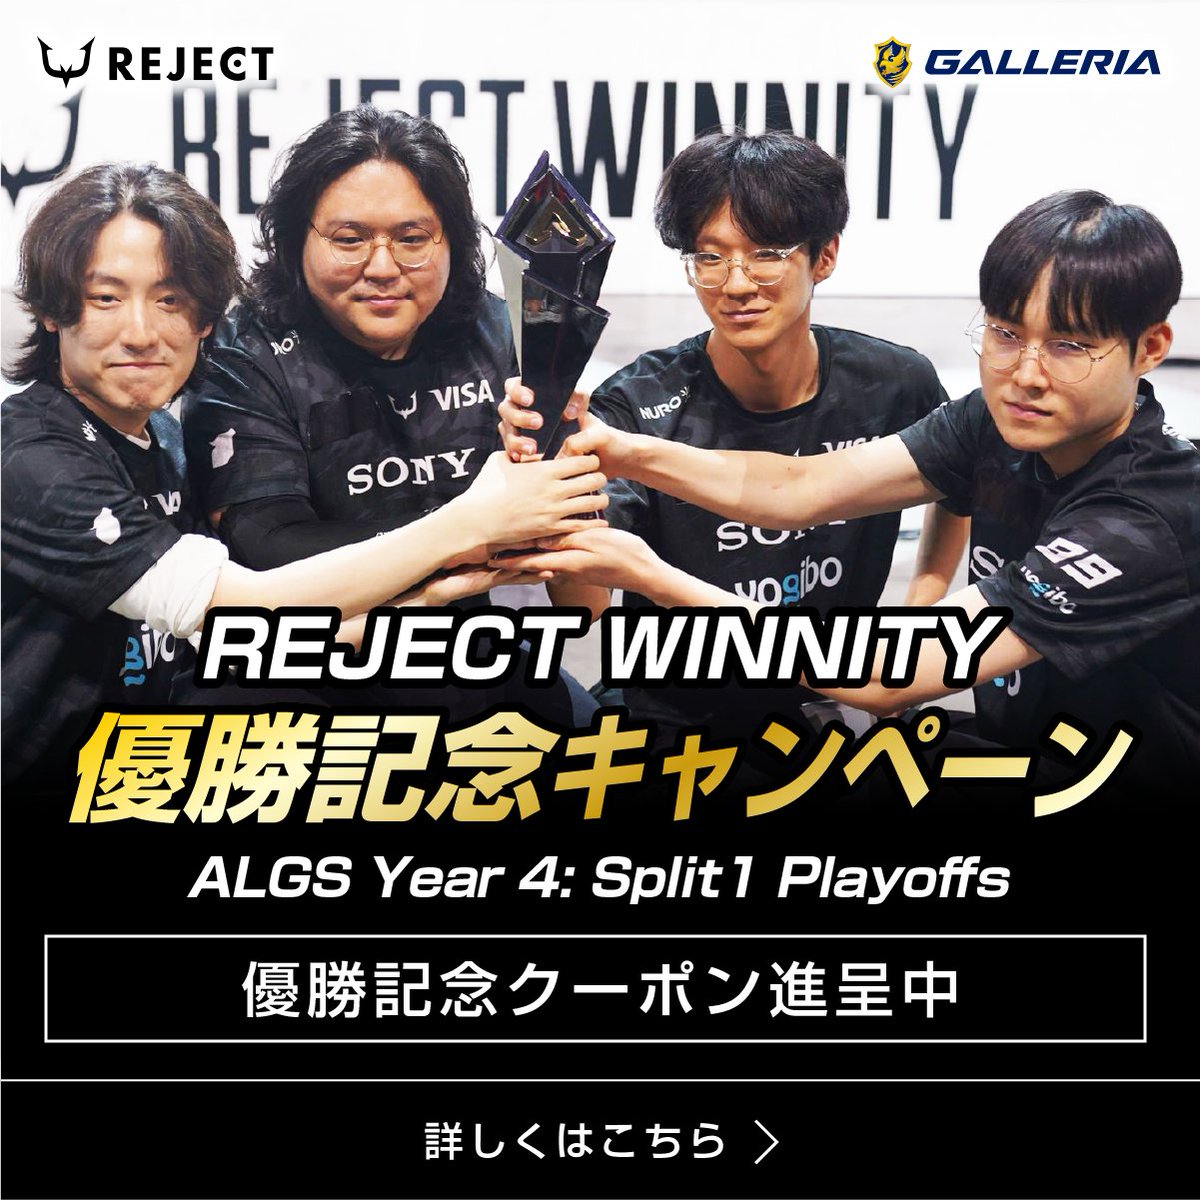 ＼REJECT WINNITY㊗️優勝記念キャンペーン／ #ガレリア がスポンサードするeスポーツチーム REJECT Apex Legends部門REJECT WINNITYが ALGS Year 4: Split1 Playoffsで優勝いたしました🎉🏆 こちらを記念して、優勝記念キャンペーンを開催❗️ 👇詳細はコチラ👇 dospara.co.jp/gamepc/cts-alg… #ALGS #RCWIN